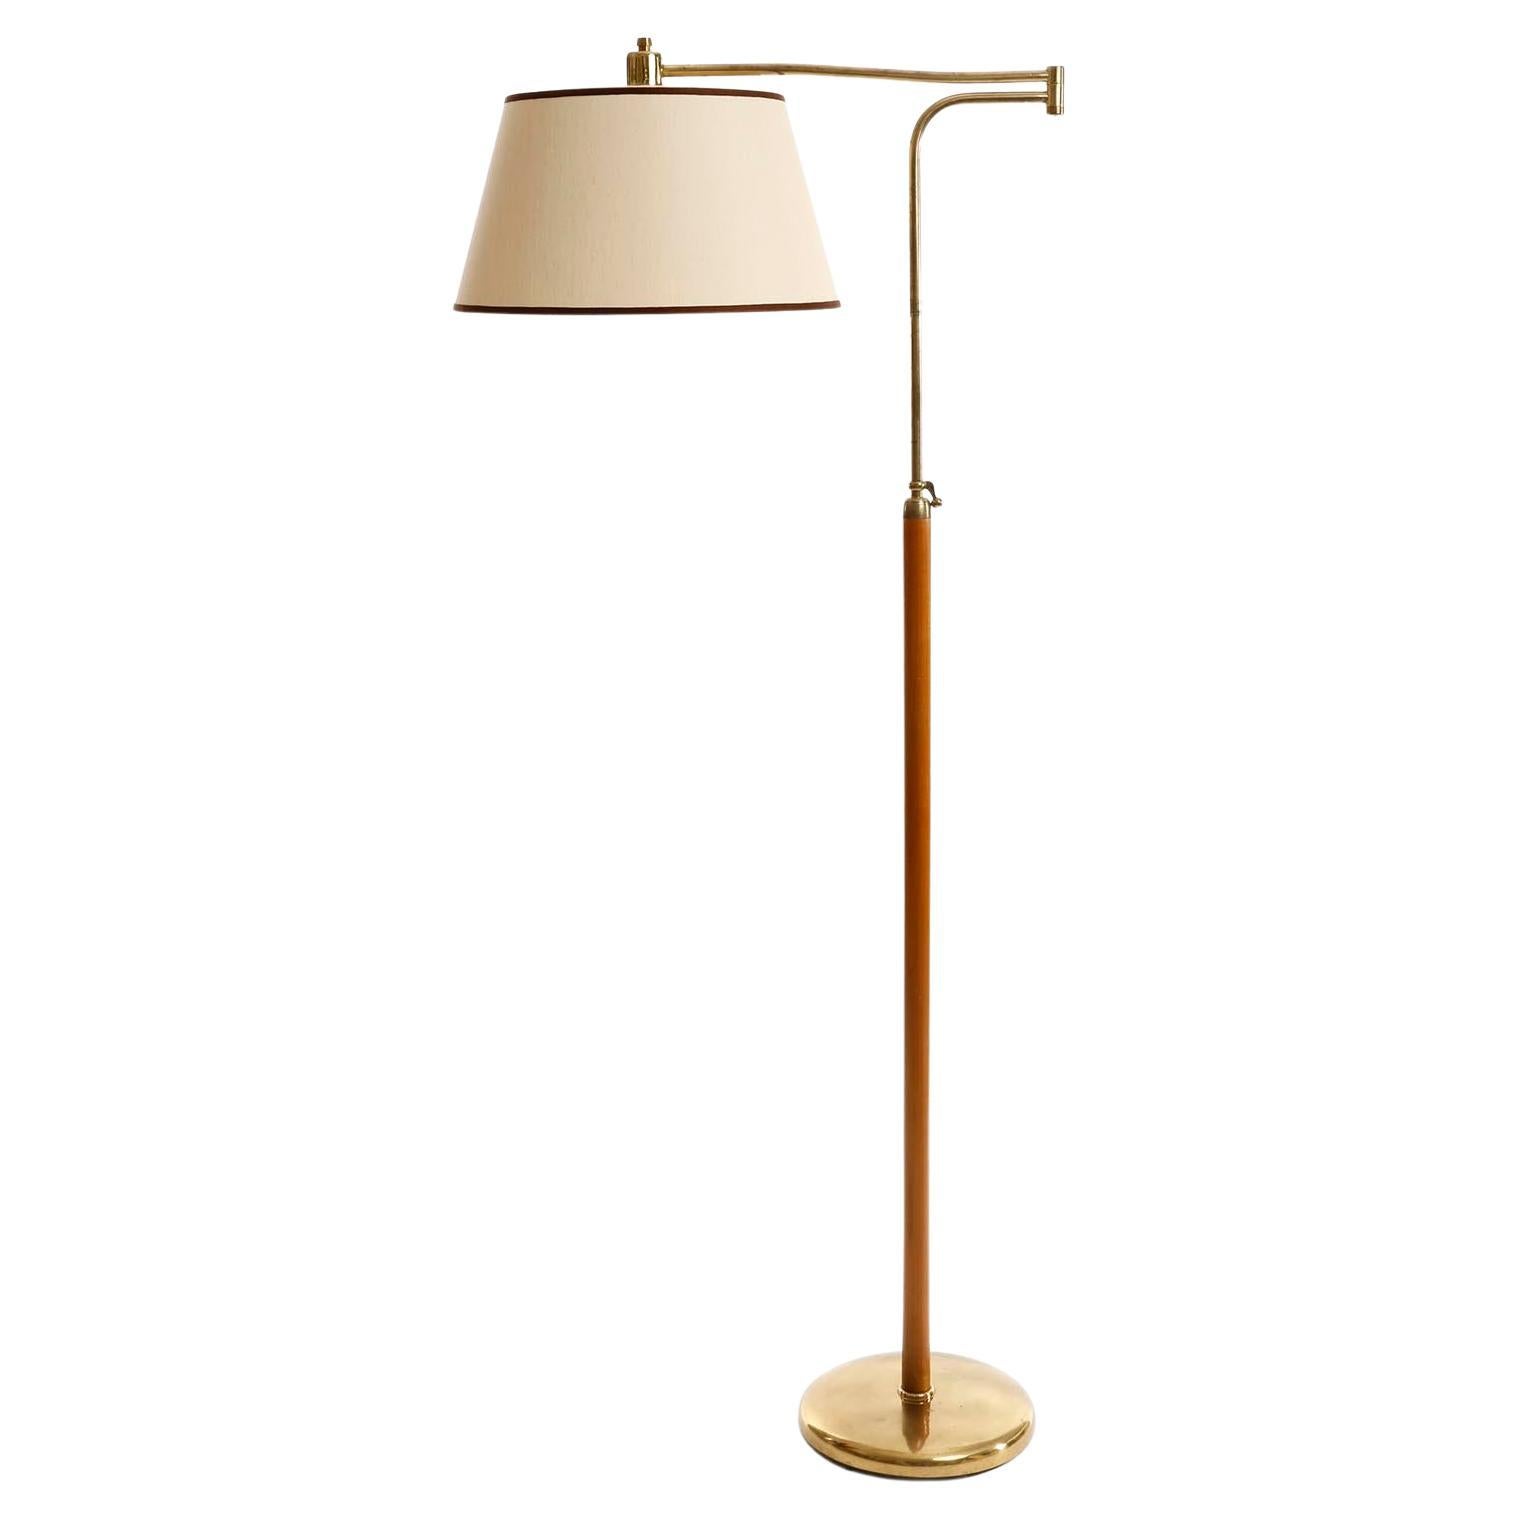 Josef Frank Adjustable Floor Lamp 'Neolift' by J.T. Kalmar, Brass Wood, 1950s